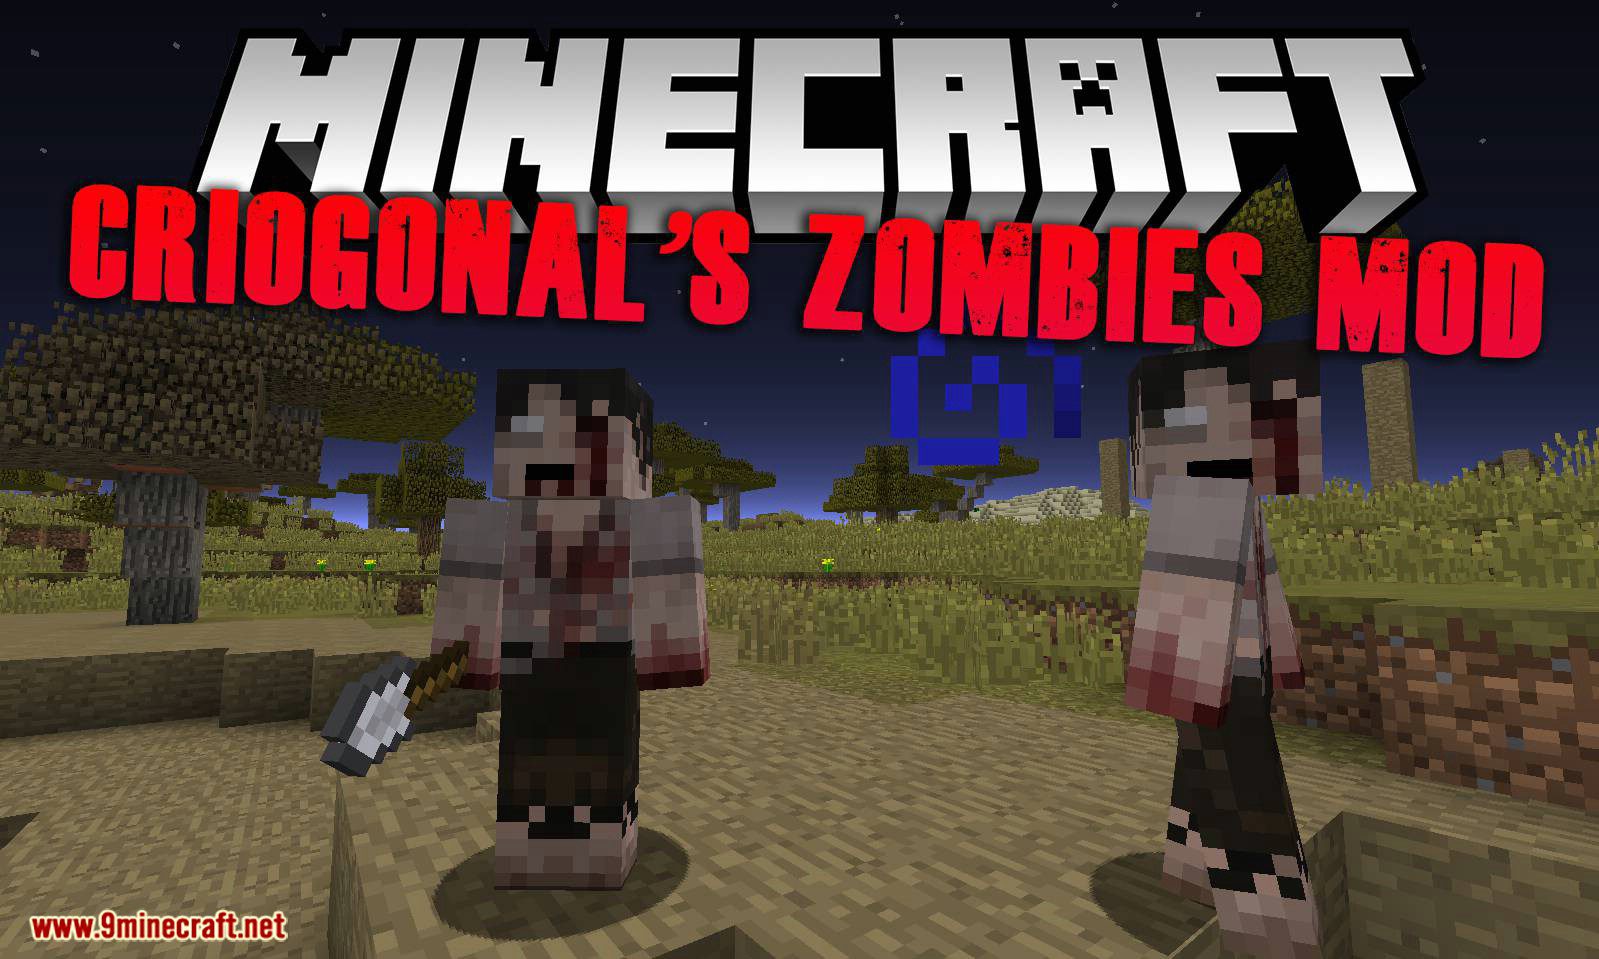 Criogonal_s Zombies Mod for minecraft logo